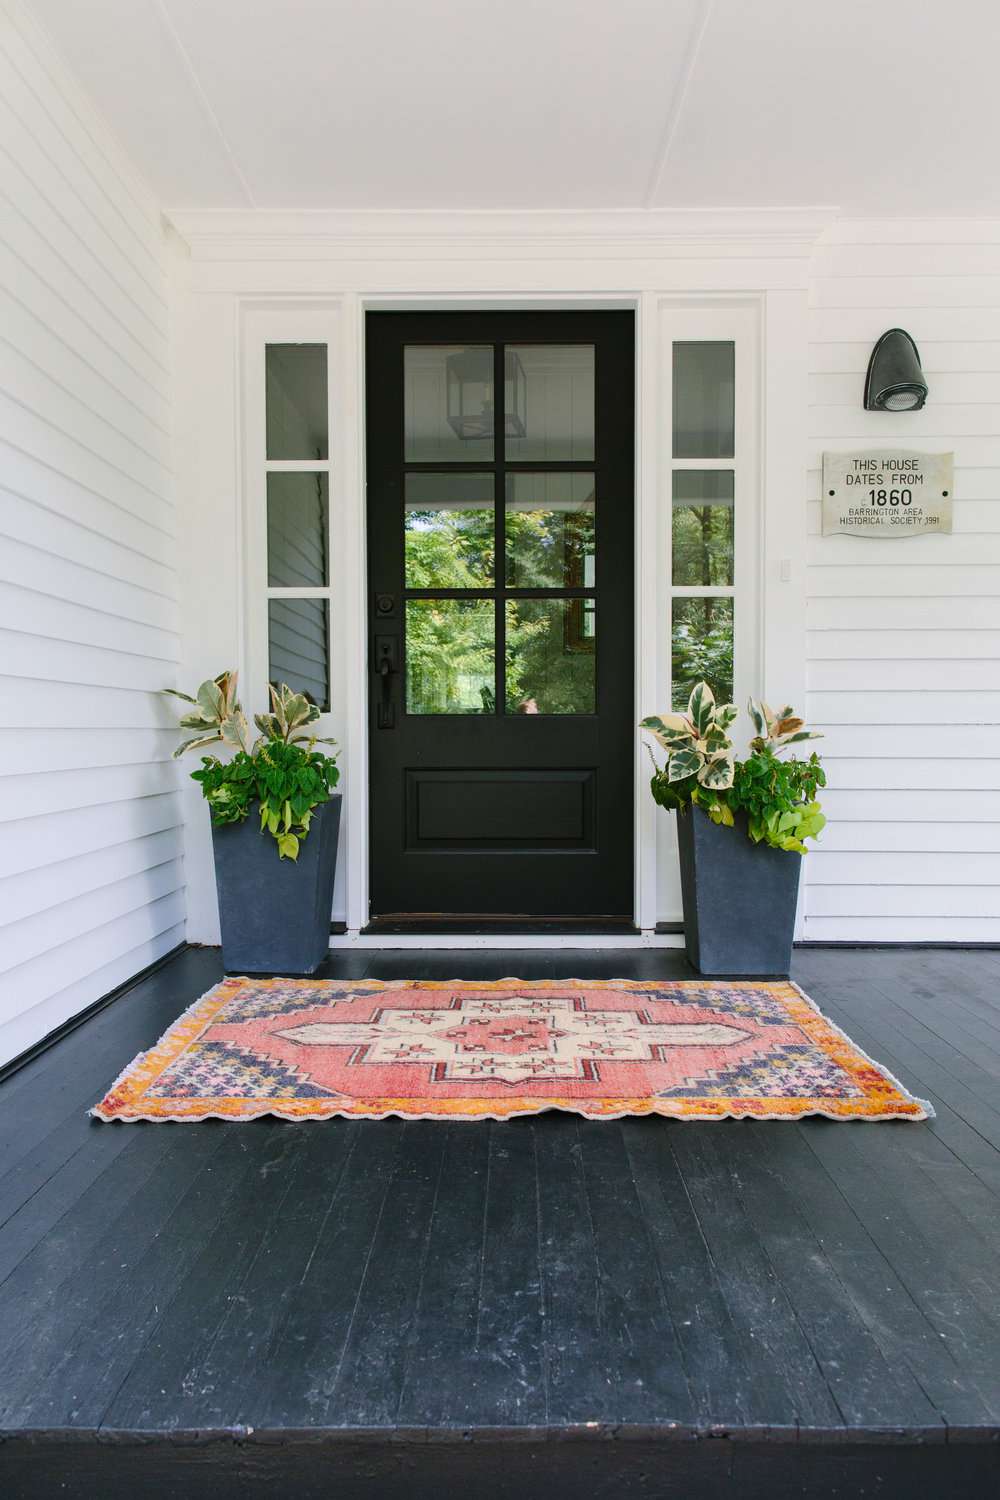 Vintage rug on a front porch